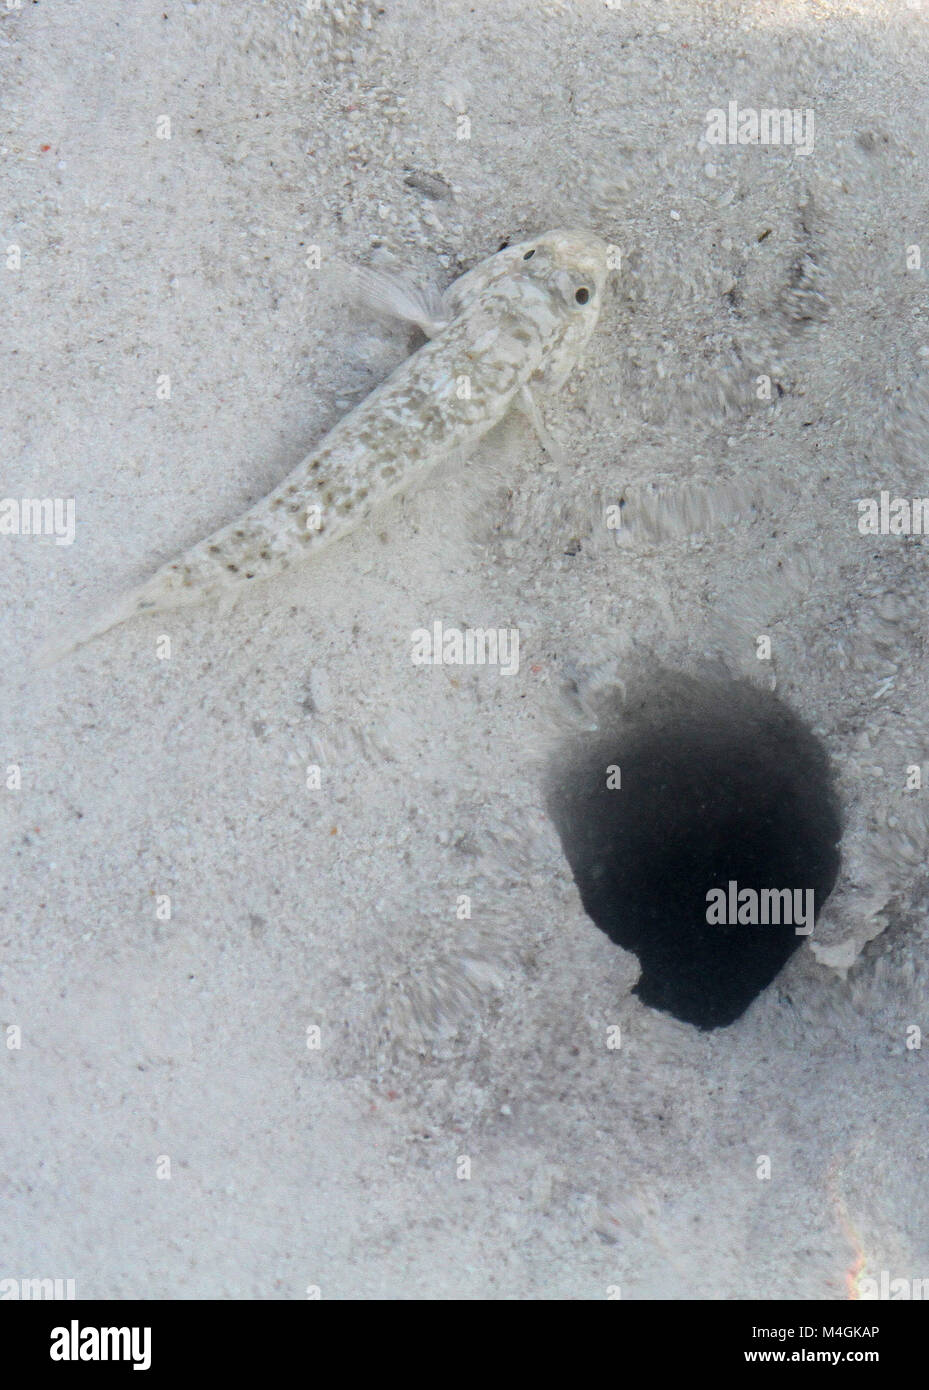 Small white and grey fish next to a crab hole, Kiwengwa beach, Zanzibar, Tanzania. Stock Photo